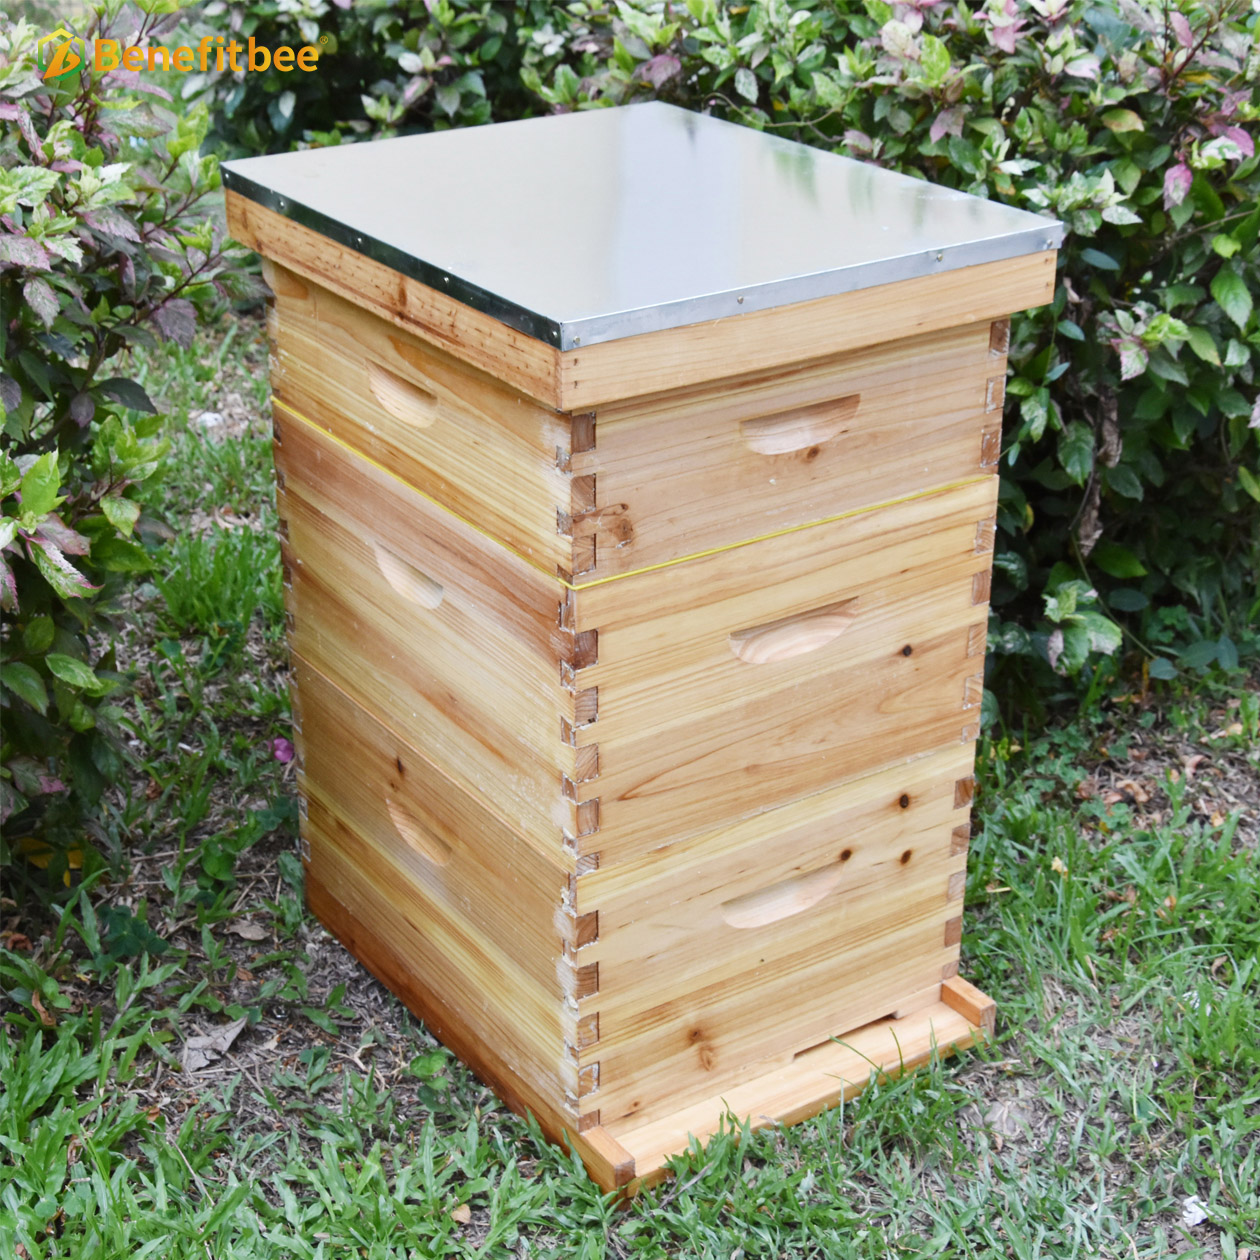 Benefitbee Langstroth Beehive Kit bee hives beekeeping bee hive kit with 10 frames